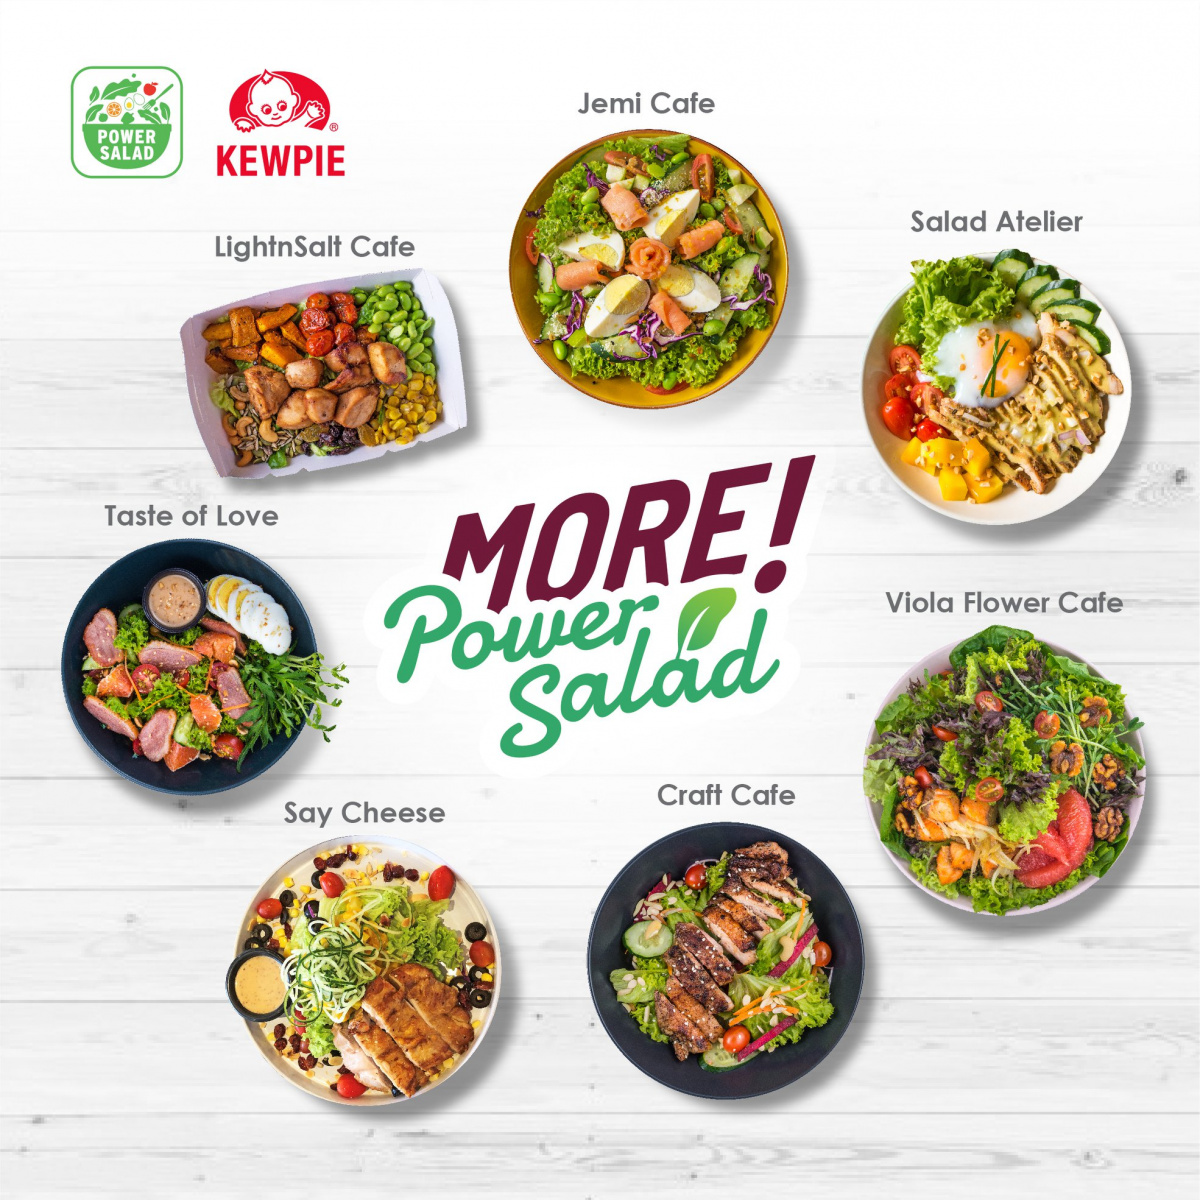 Power Salad Campaign – More Power Salad!